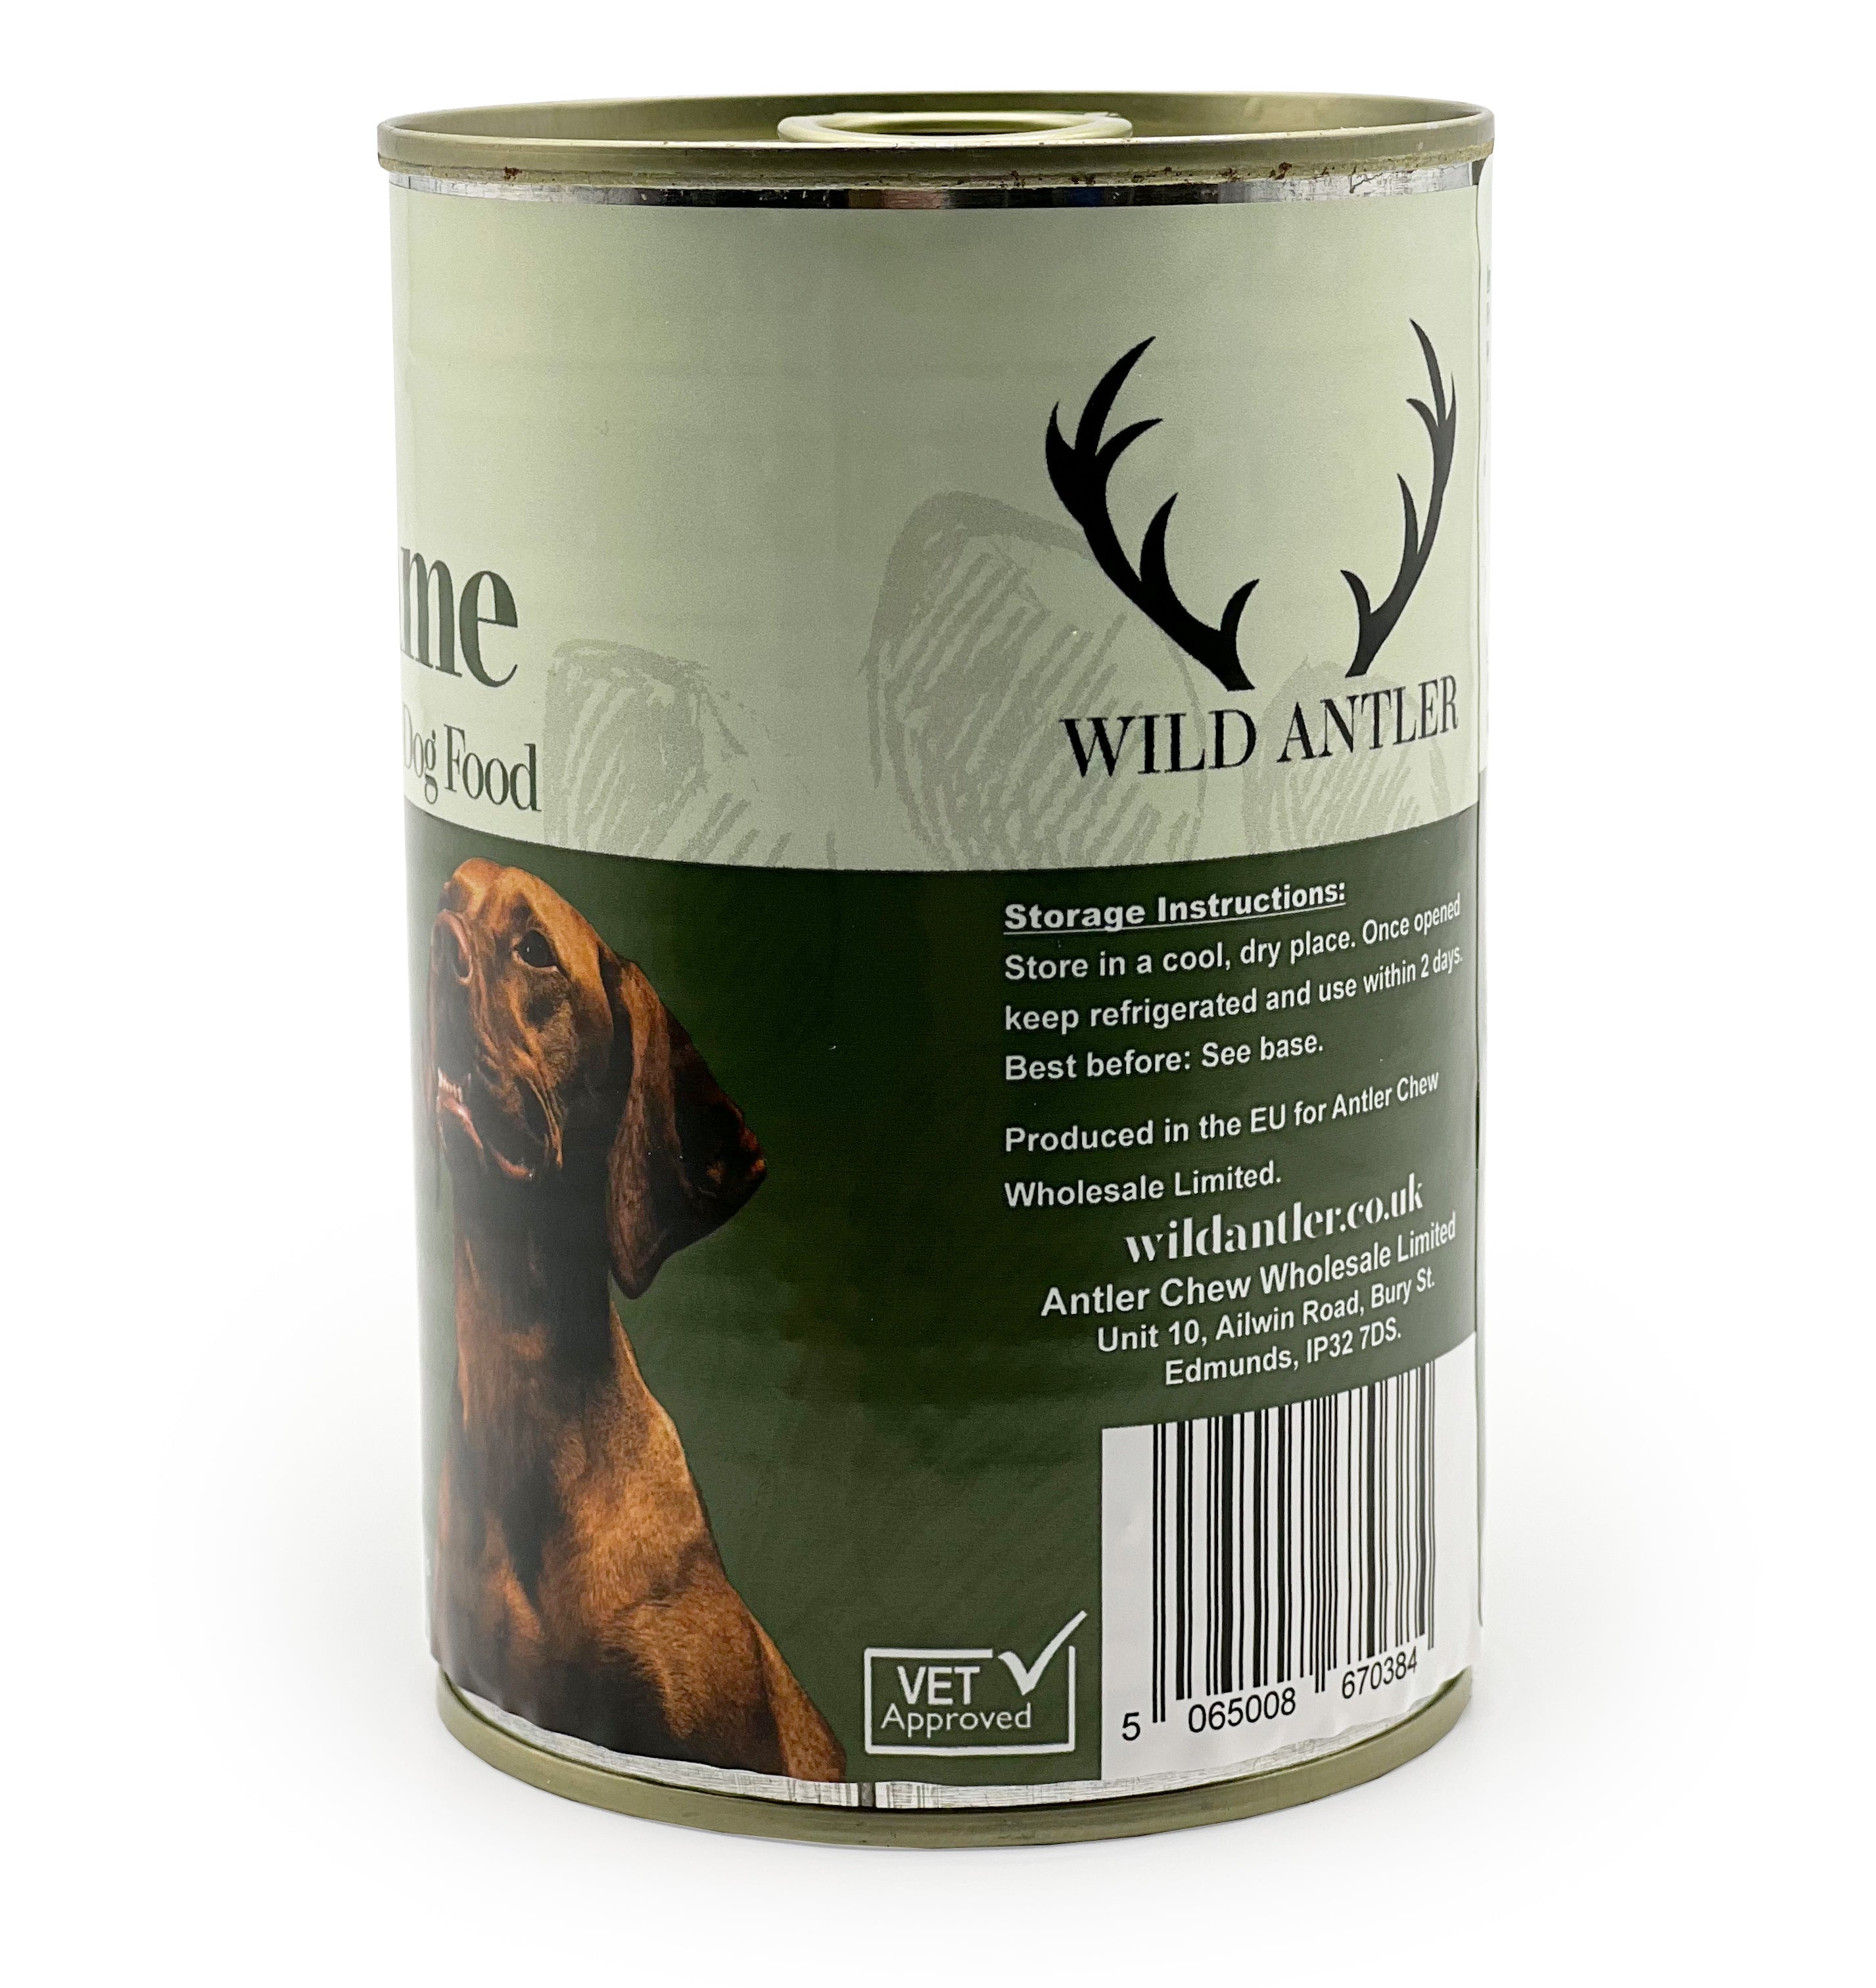 12 x Wild Game - Grain Free Complete Wet Working Dog Food 400g - Antler Chew